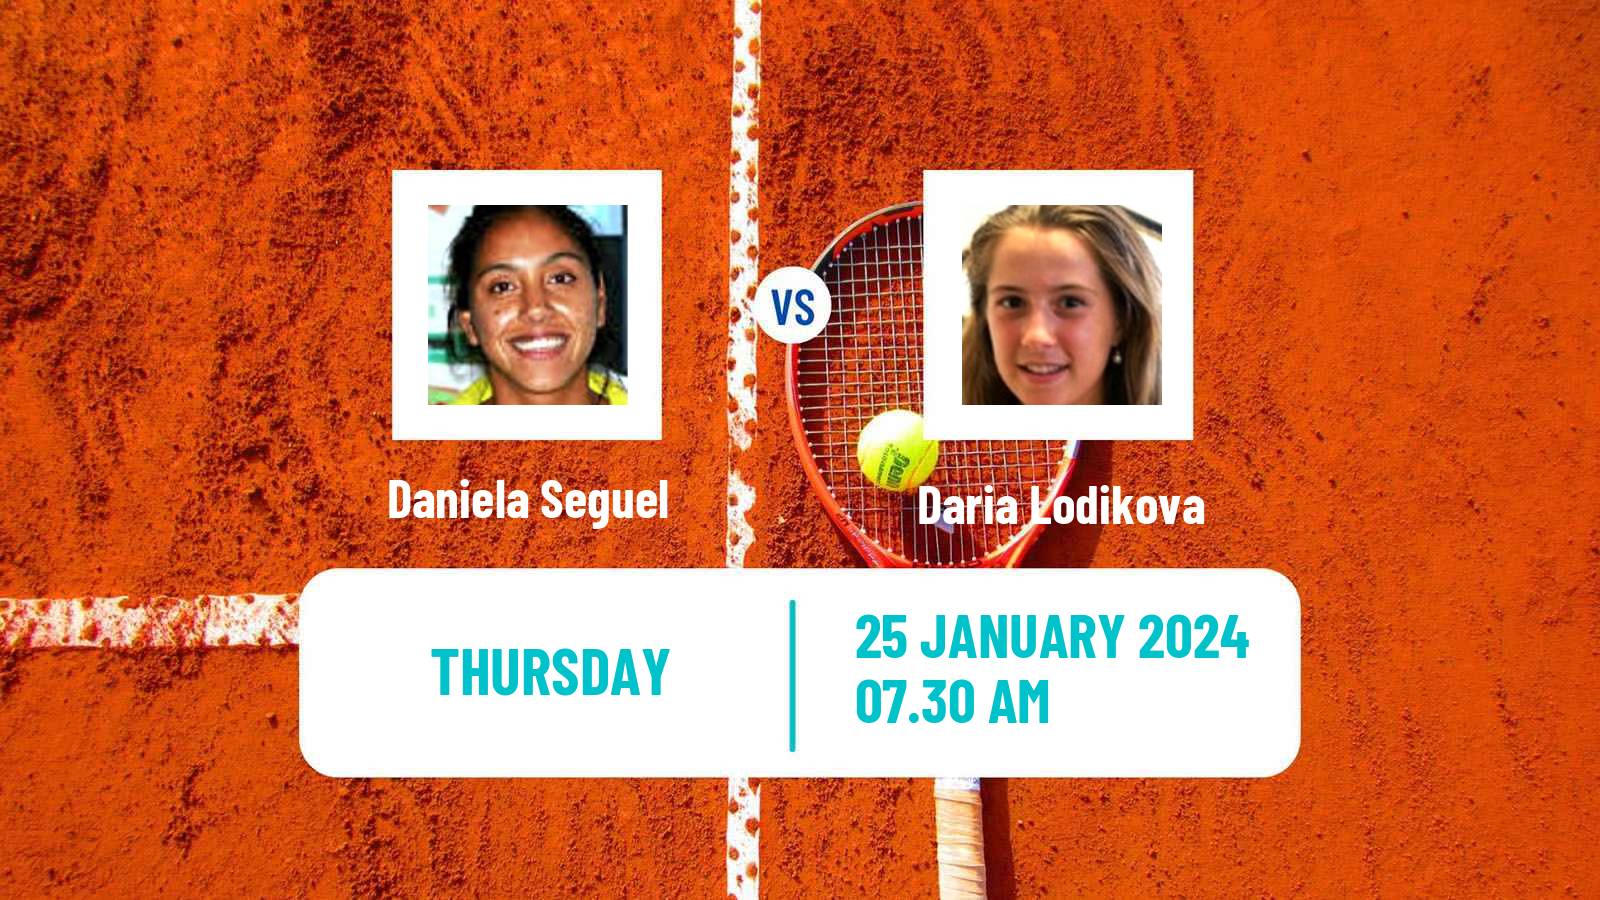 Tennis ITF W35 Buenos Aires 2 Women Daniela Seguel - Daria Lodikova